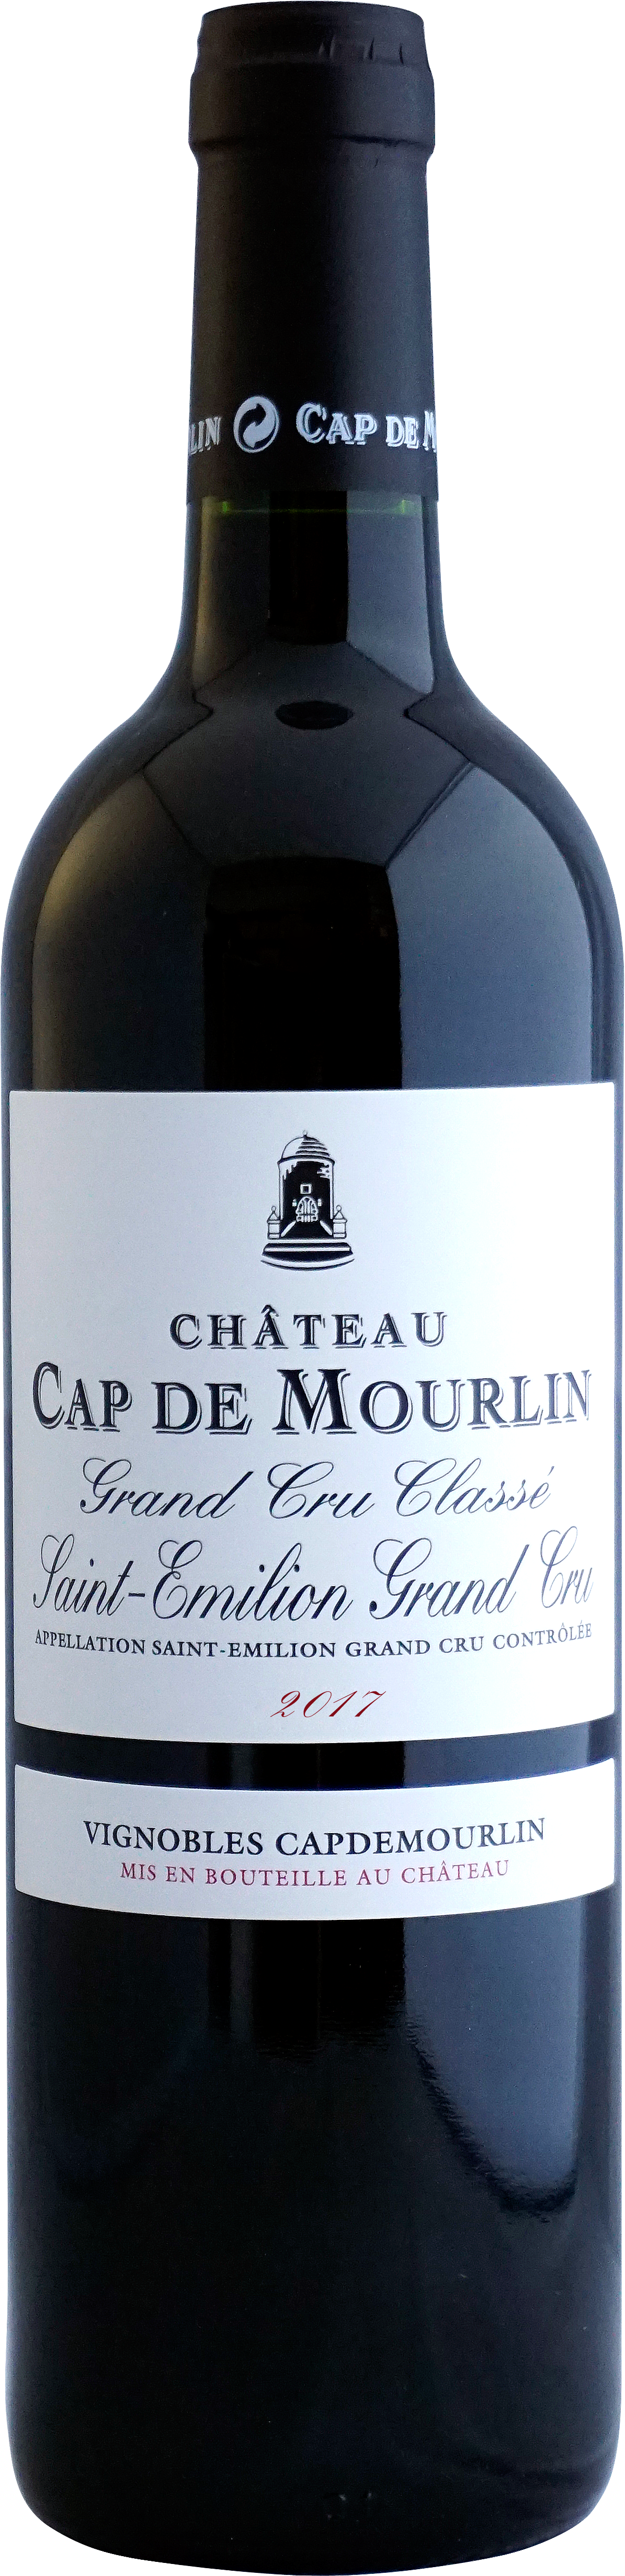 etiqueta para botella de vino Cap deMourlin